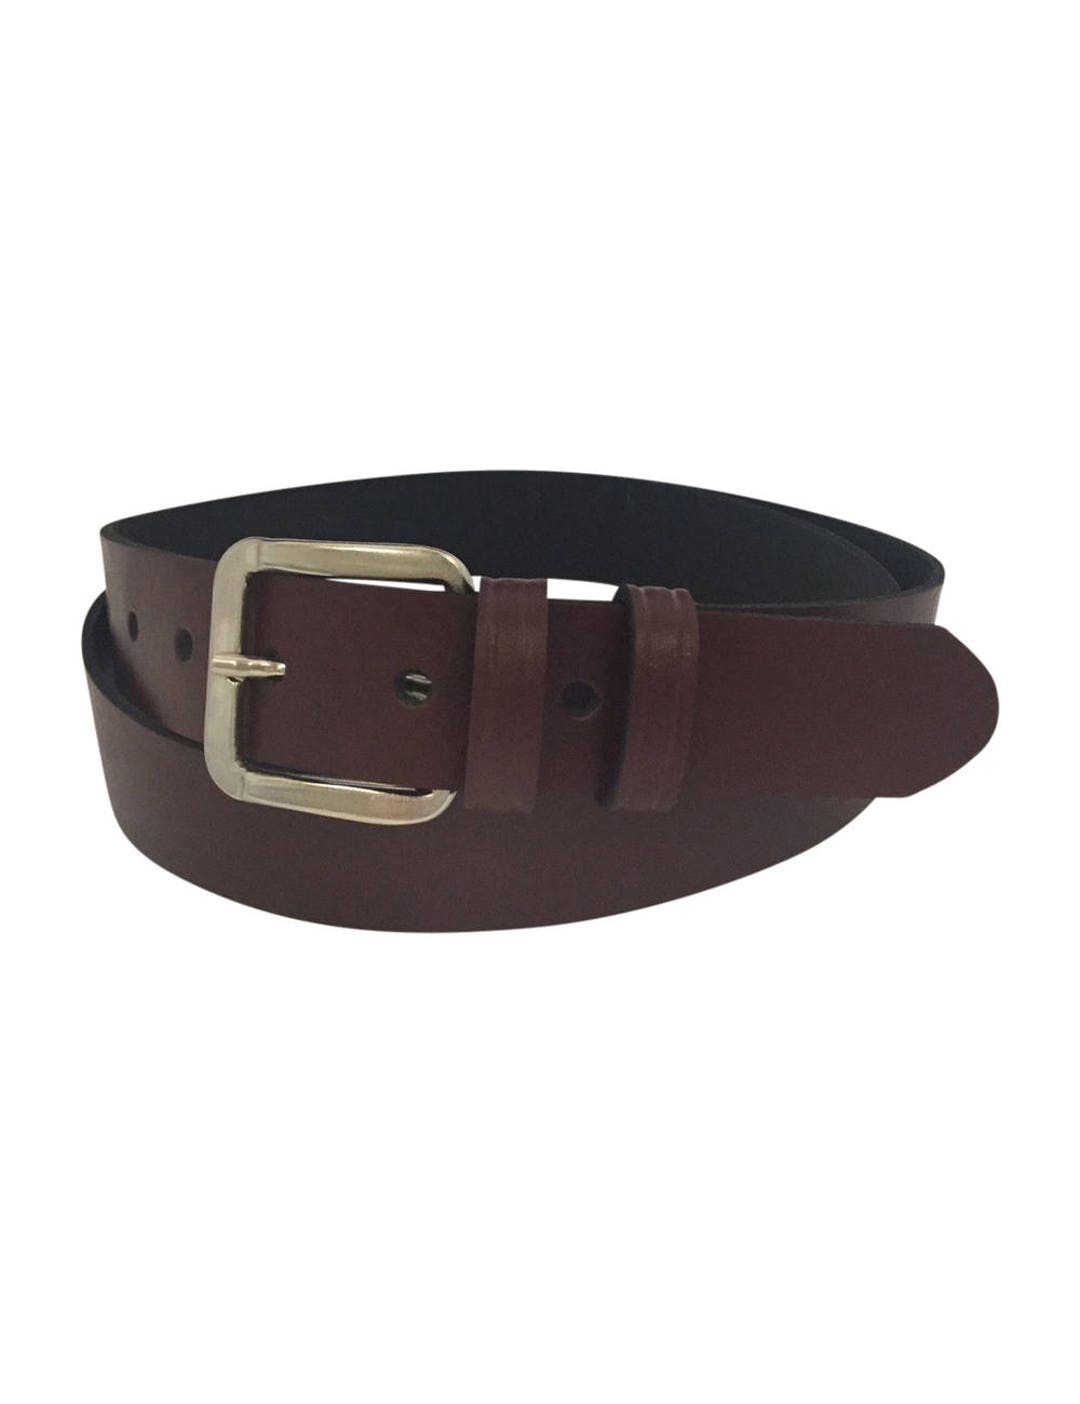 Oxblood Burgundy Leather Belt for Women & Men. 30mm Wide. - Etsy